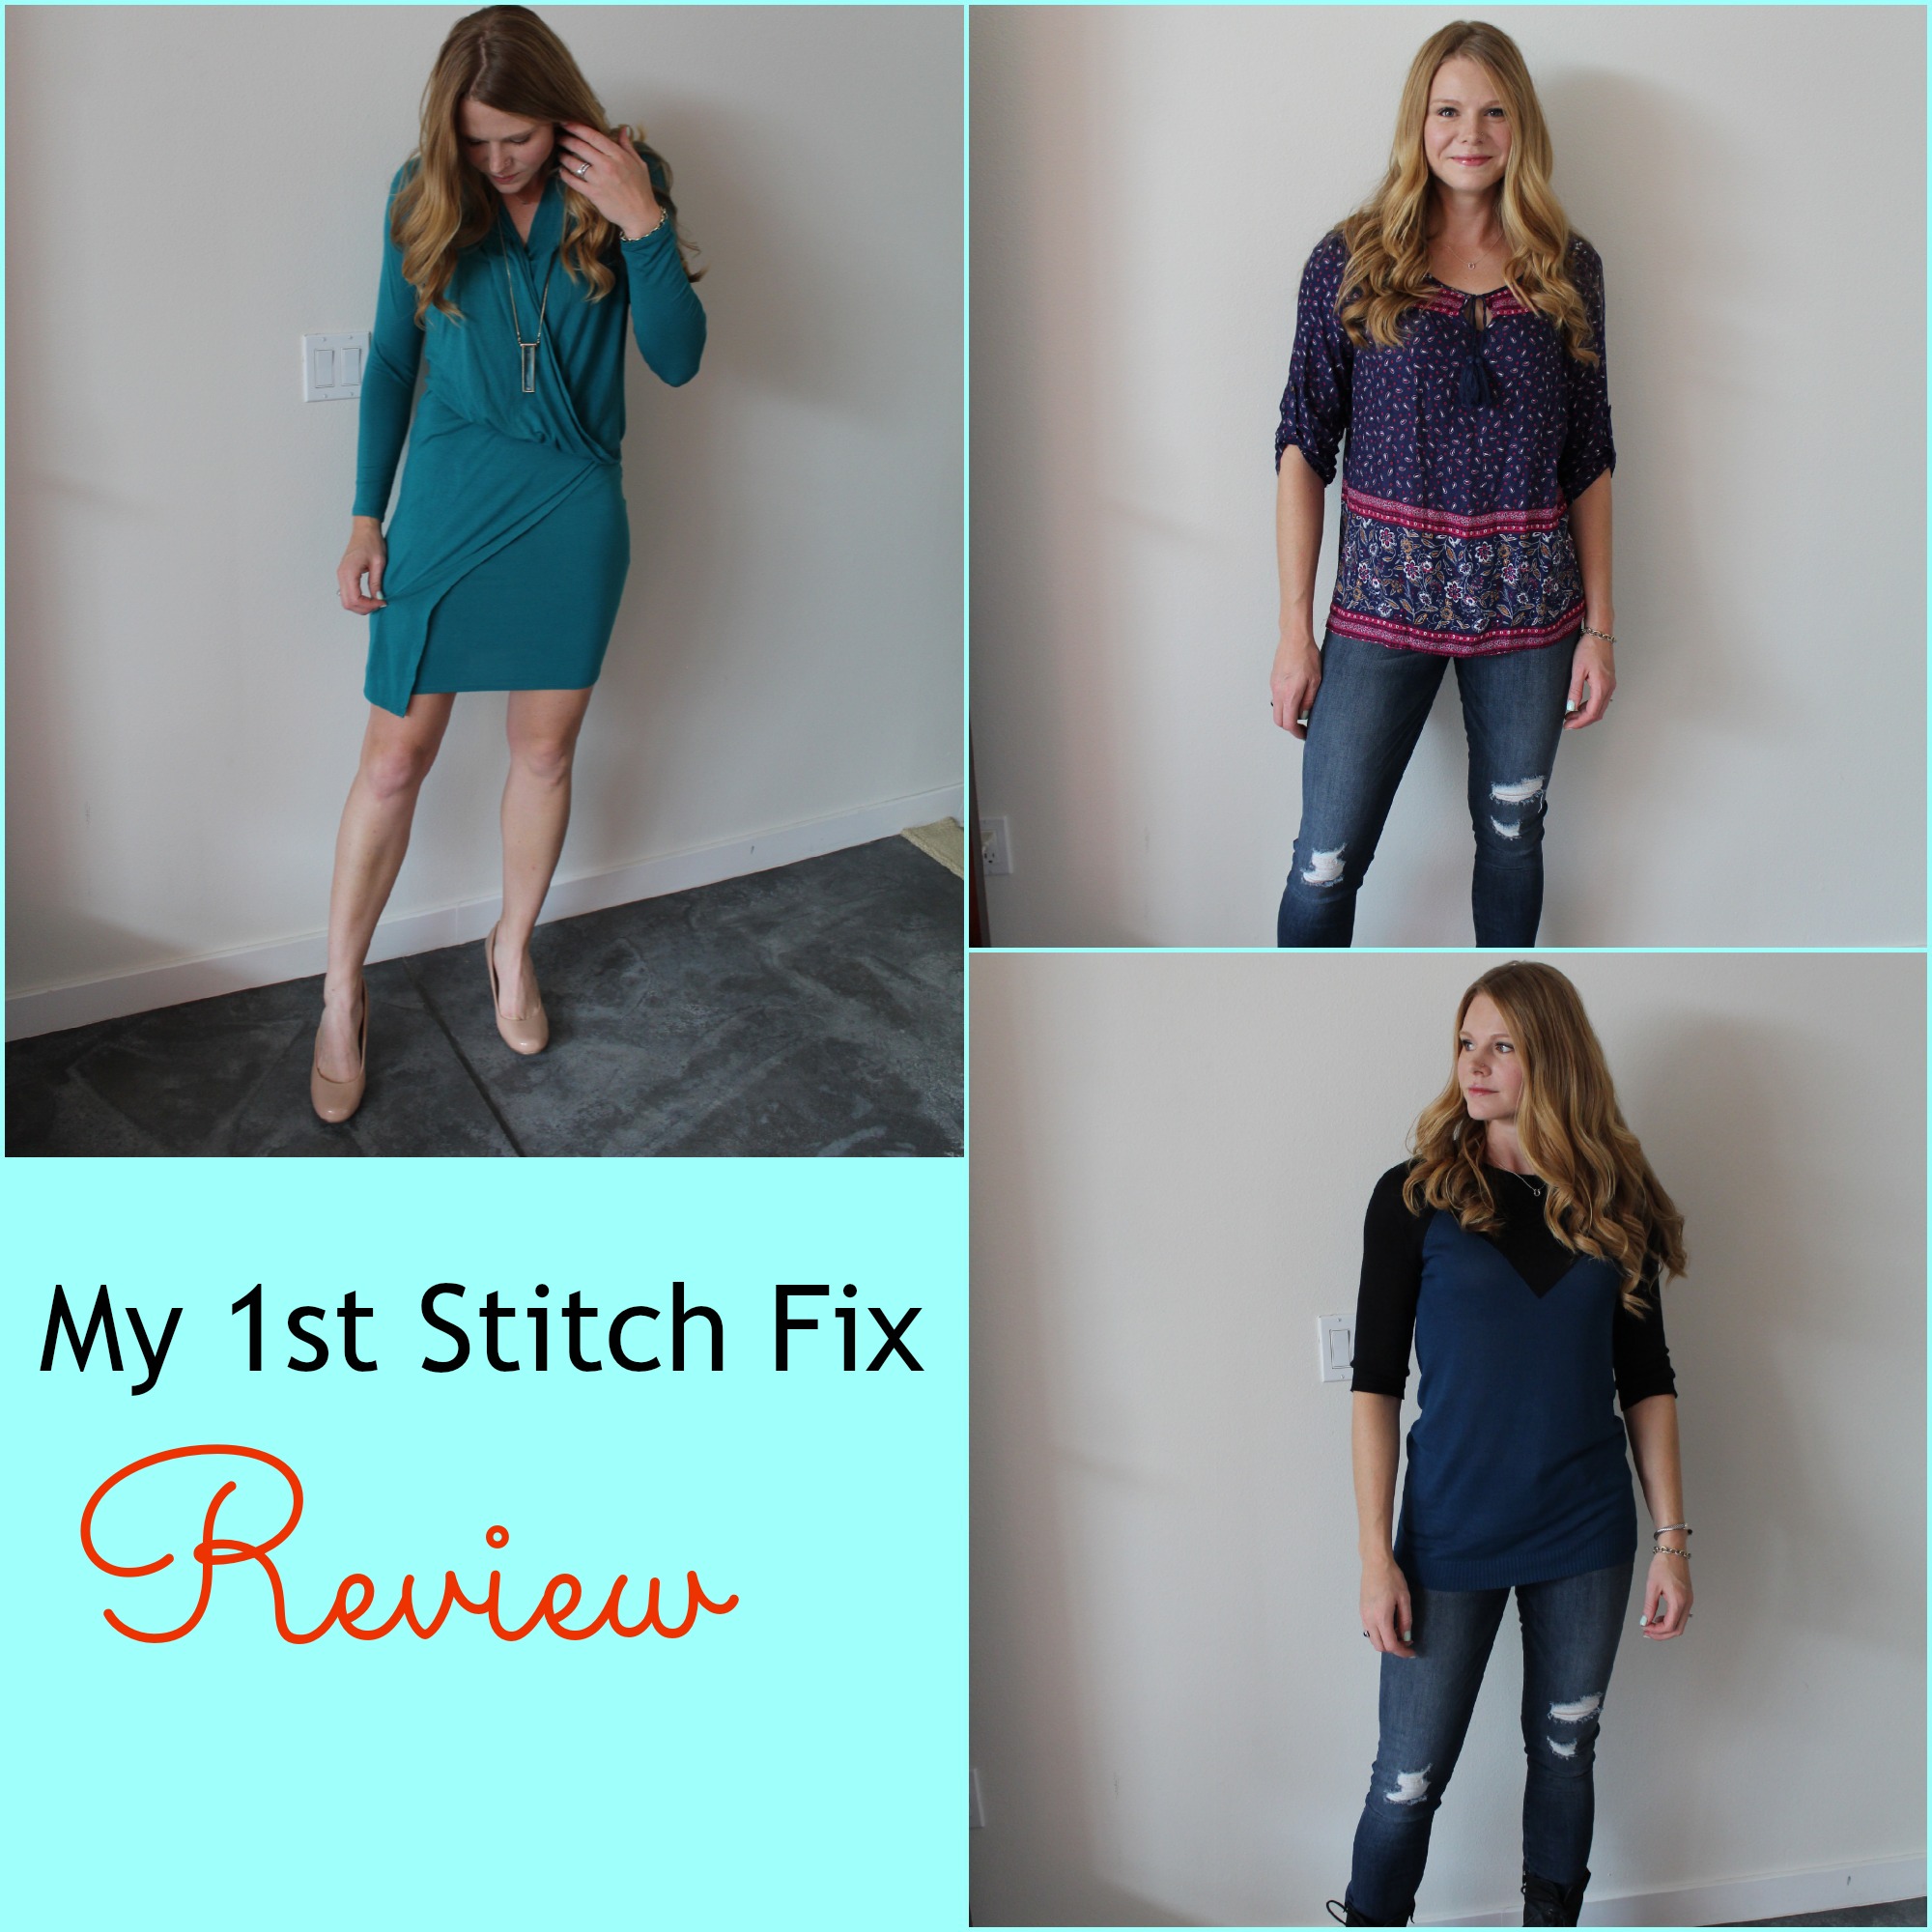 My 1st Stitch Fix Review: Should I Sign Up for Stitch Fix? - Paige Kumpf